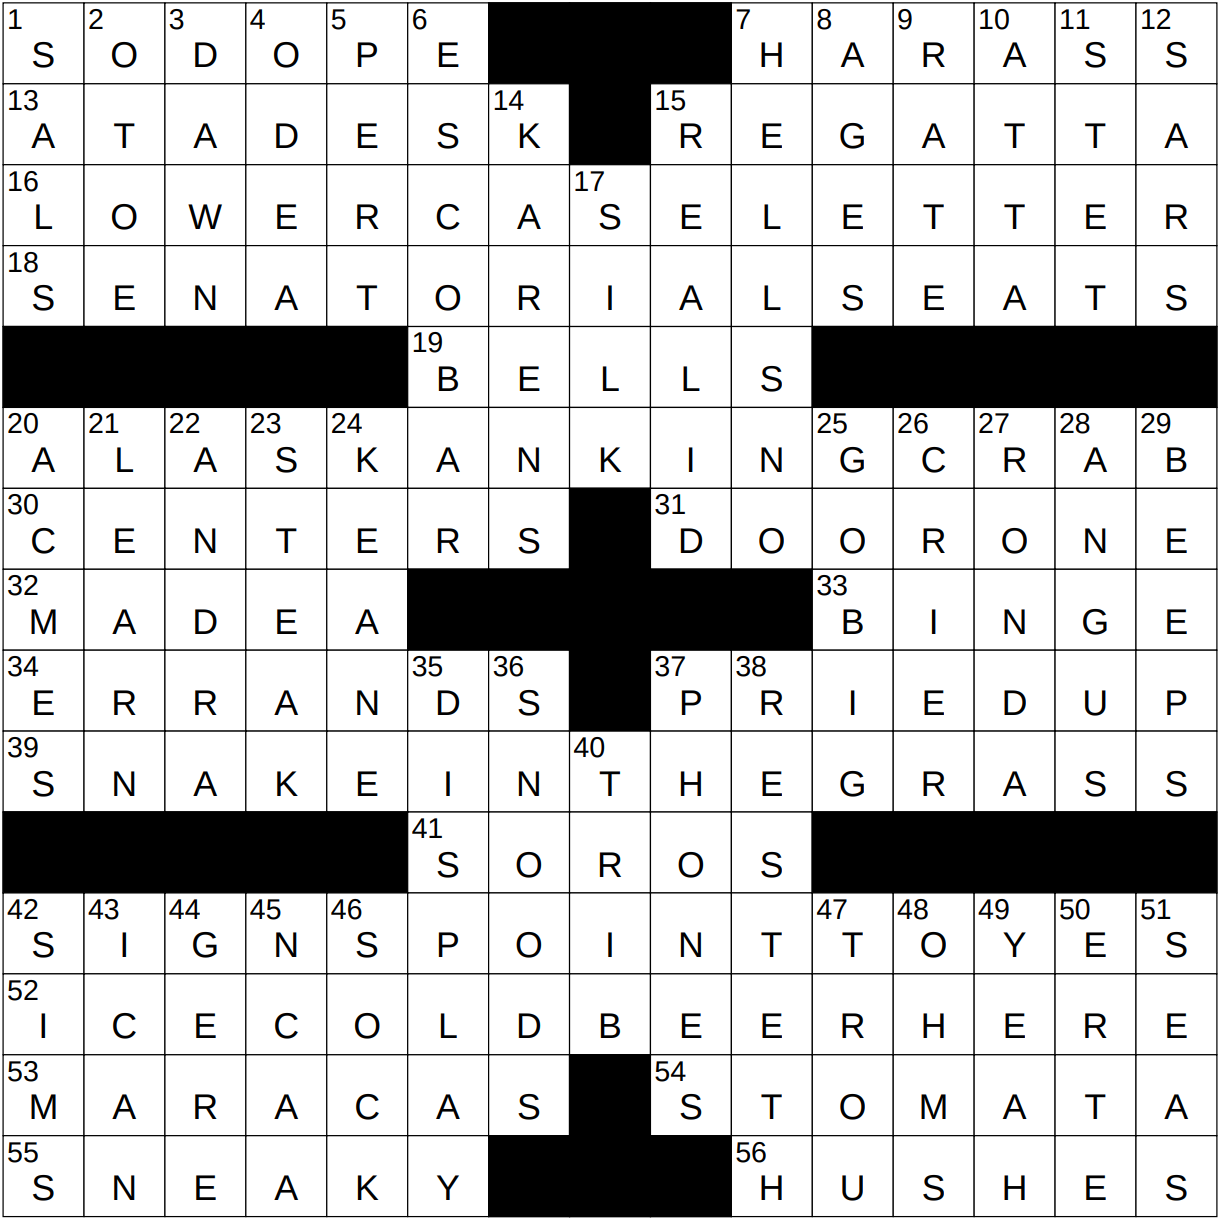 Feb. 19 crossword puzzle - INDY Week